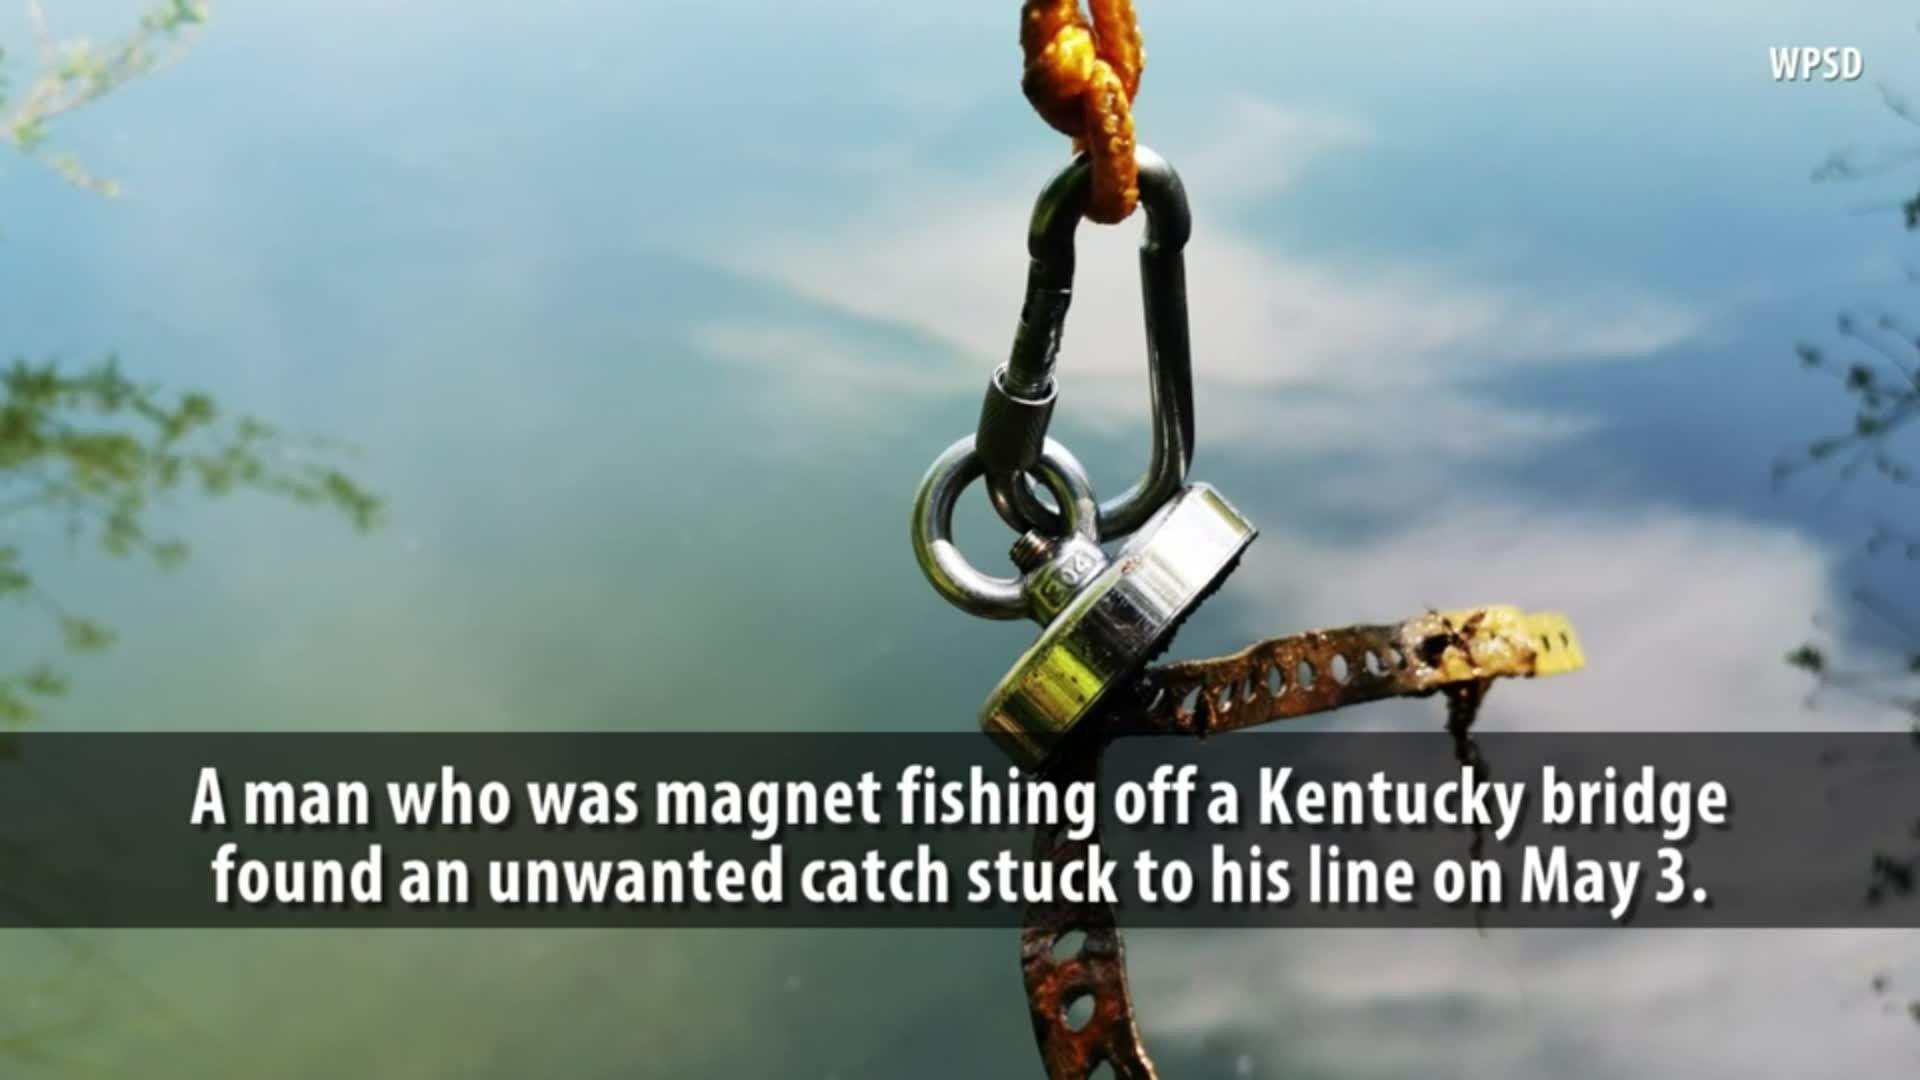 Man catches grenade while magnet fishing off Kentucky bridge, Trending